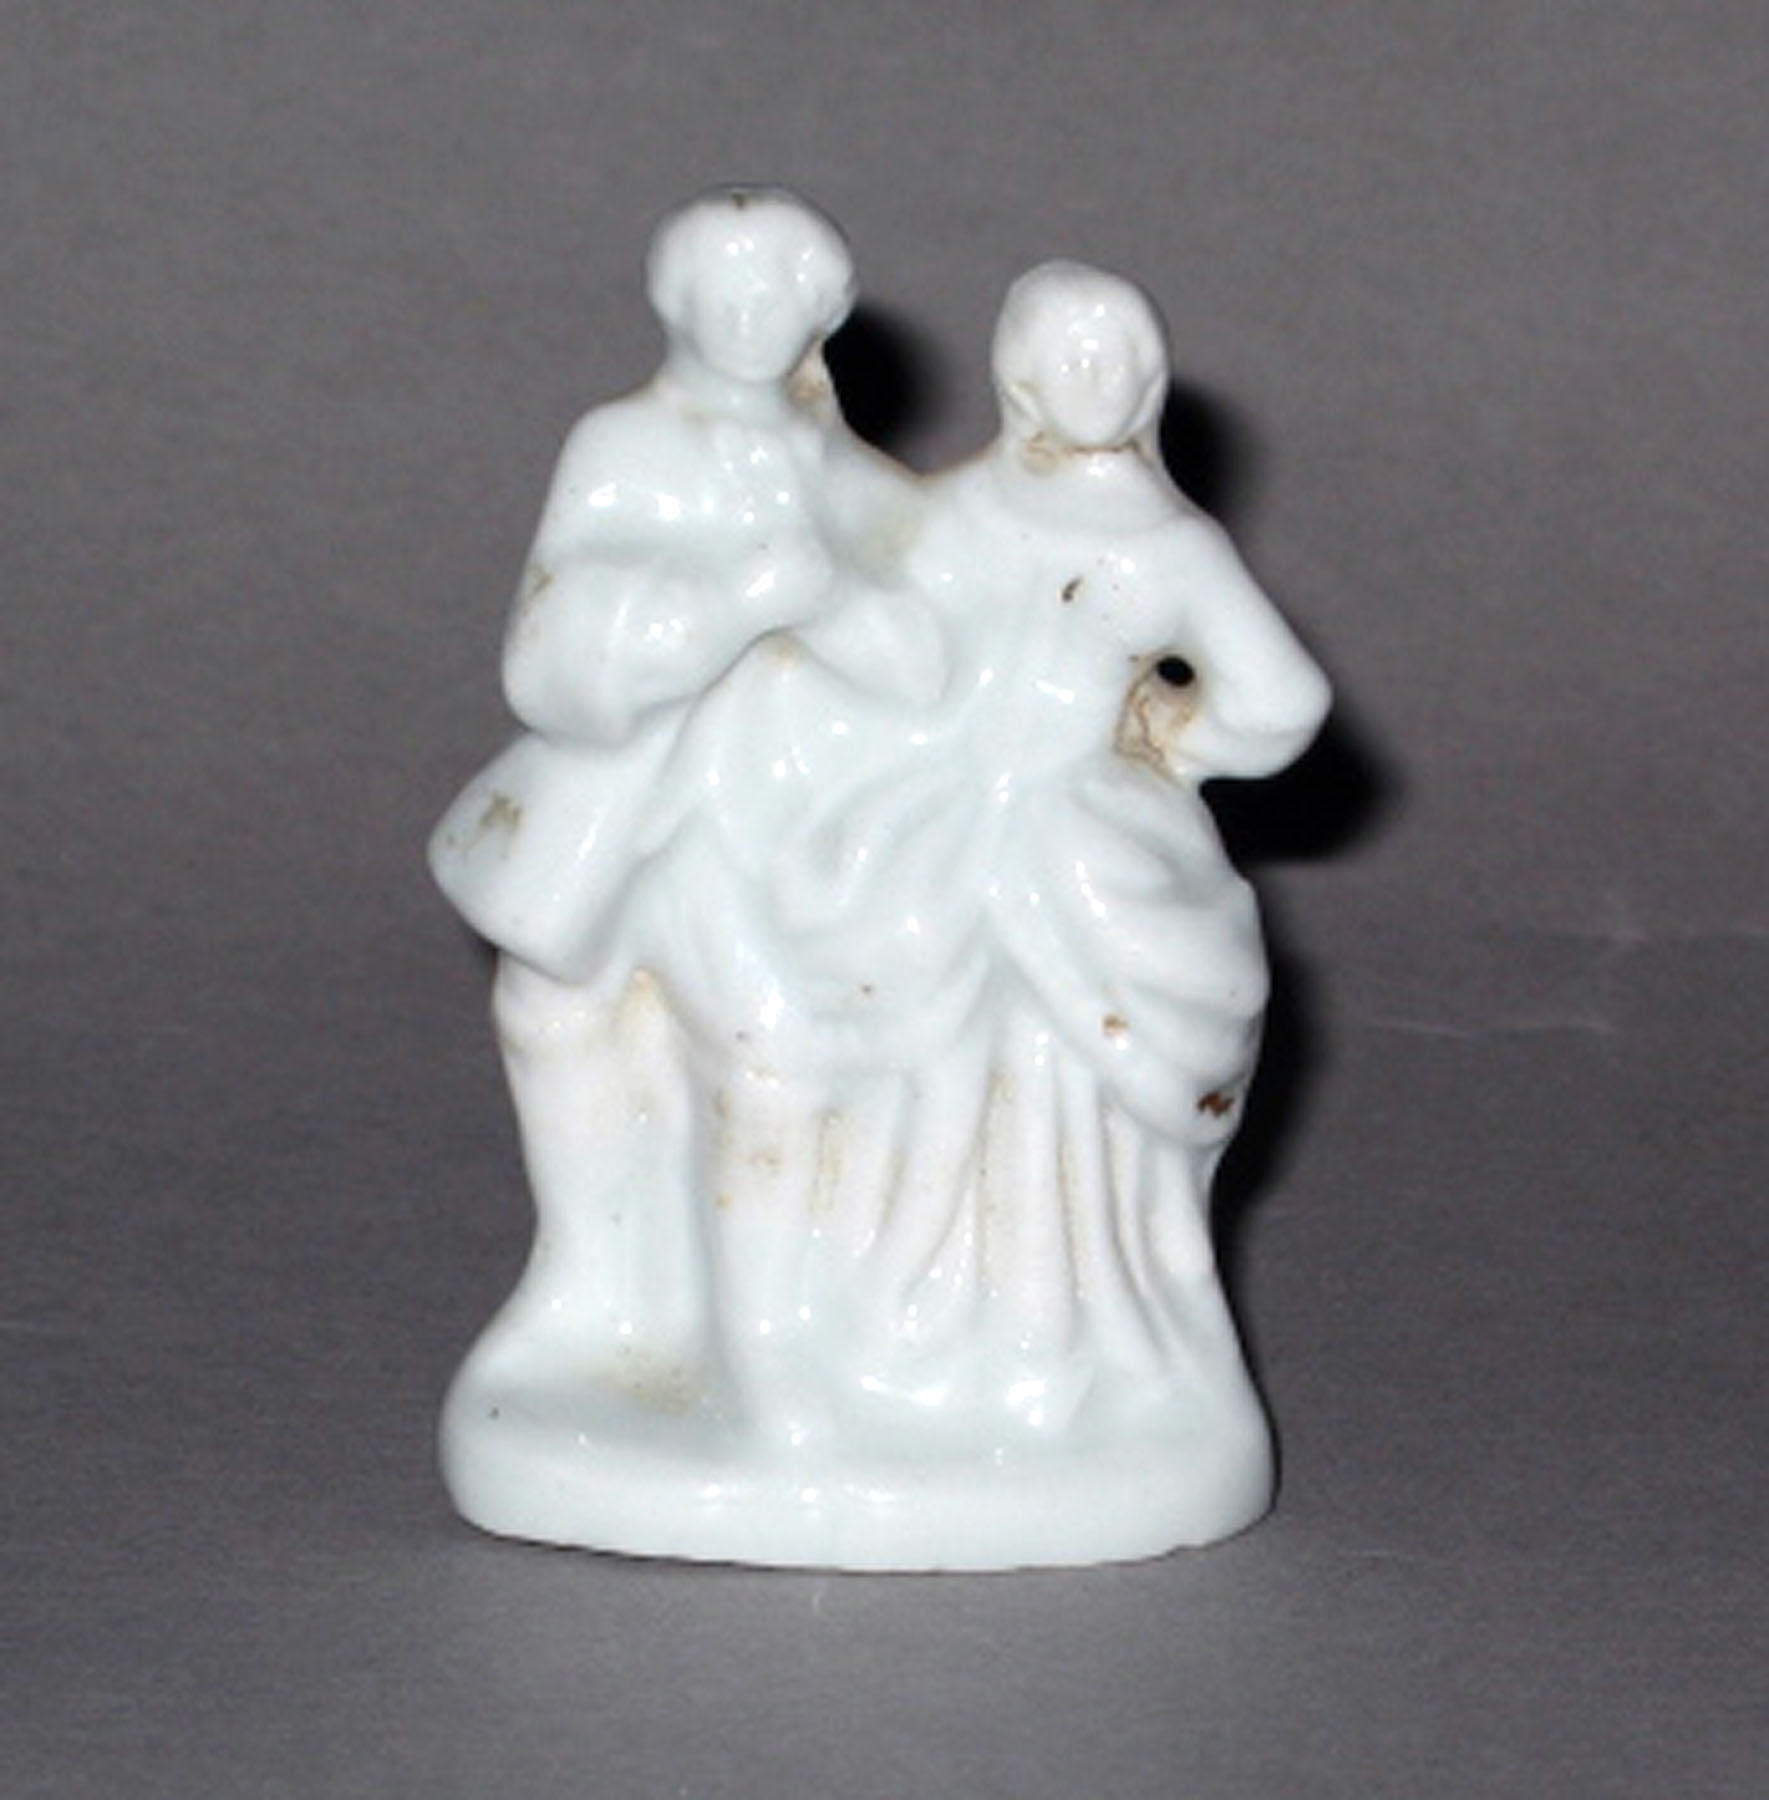 1964.1425 Miniature porcelain figure group